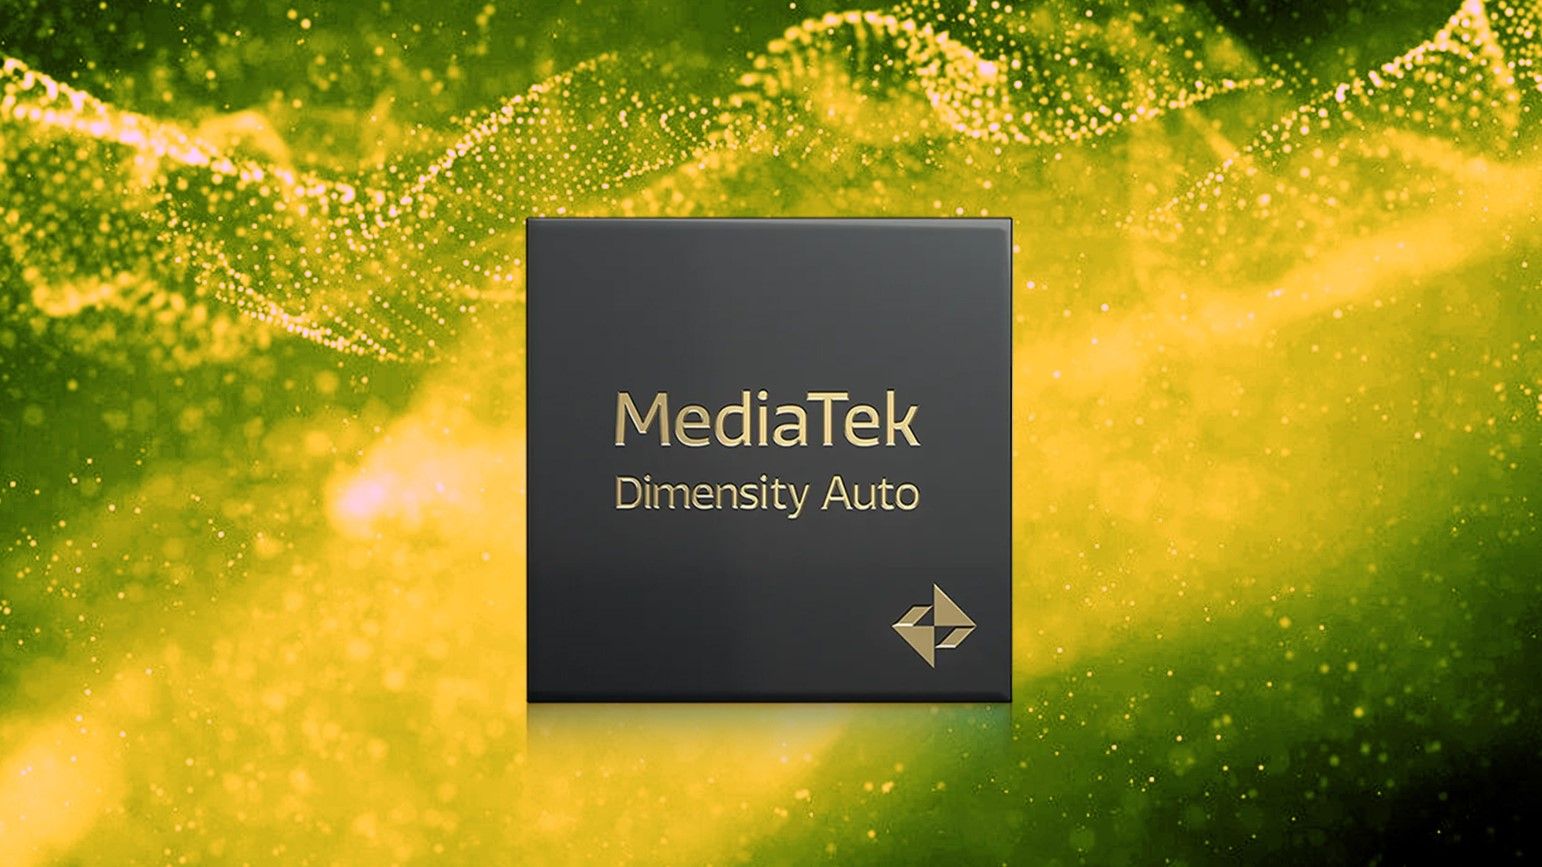 MediaTek’s new Dimensity Auto Cockpit chips bring advanced AI capabilities to vehicles